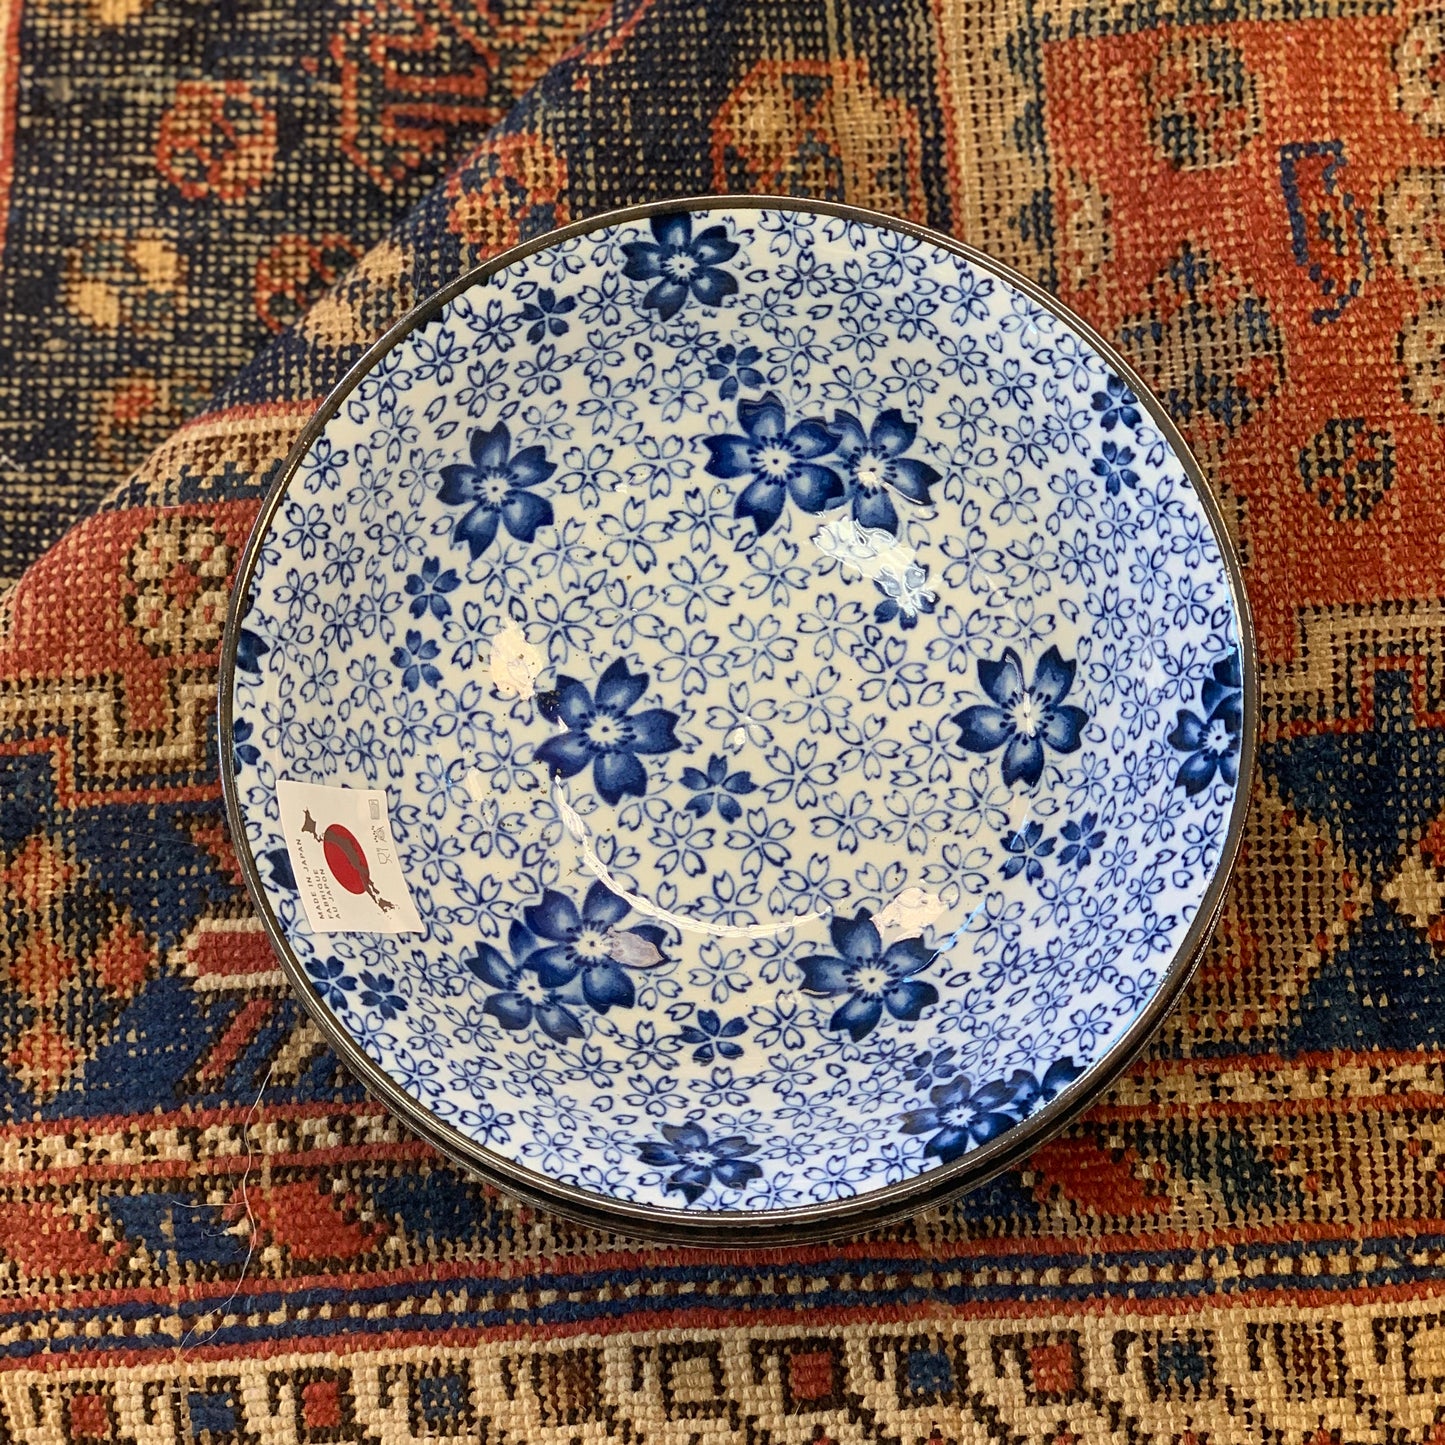 Chrys Japanese Bowls